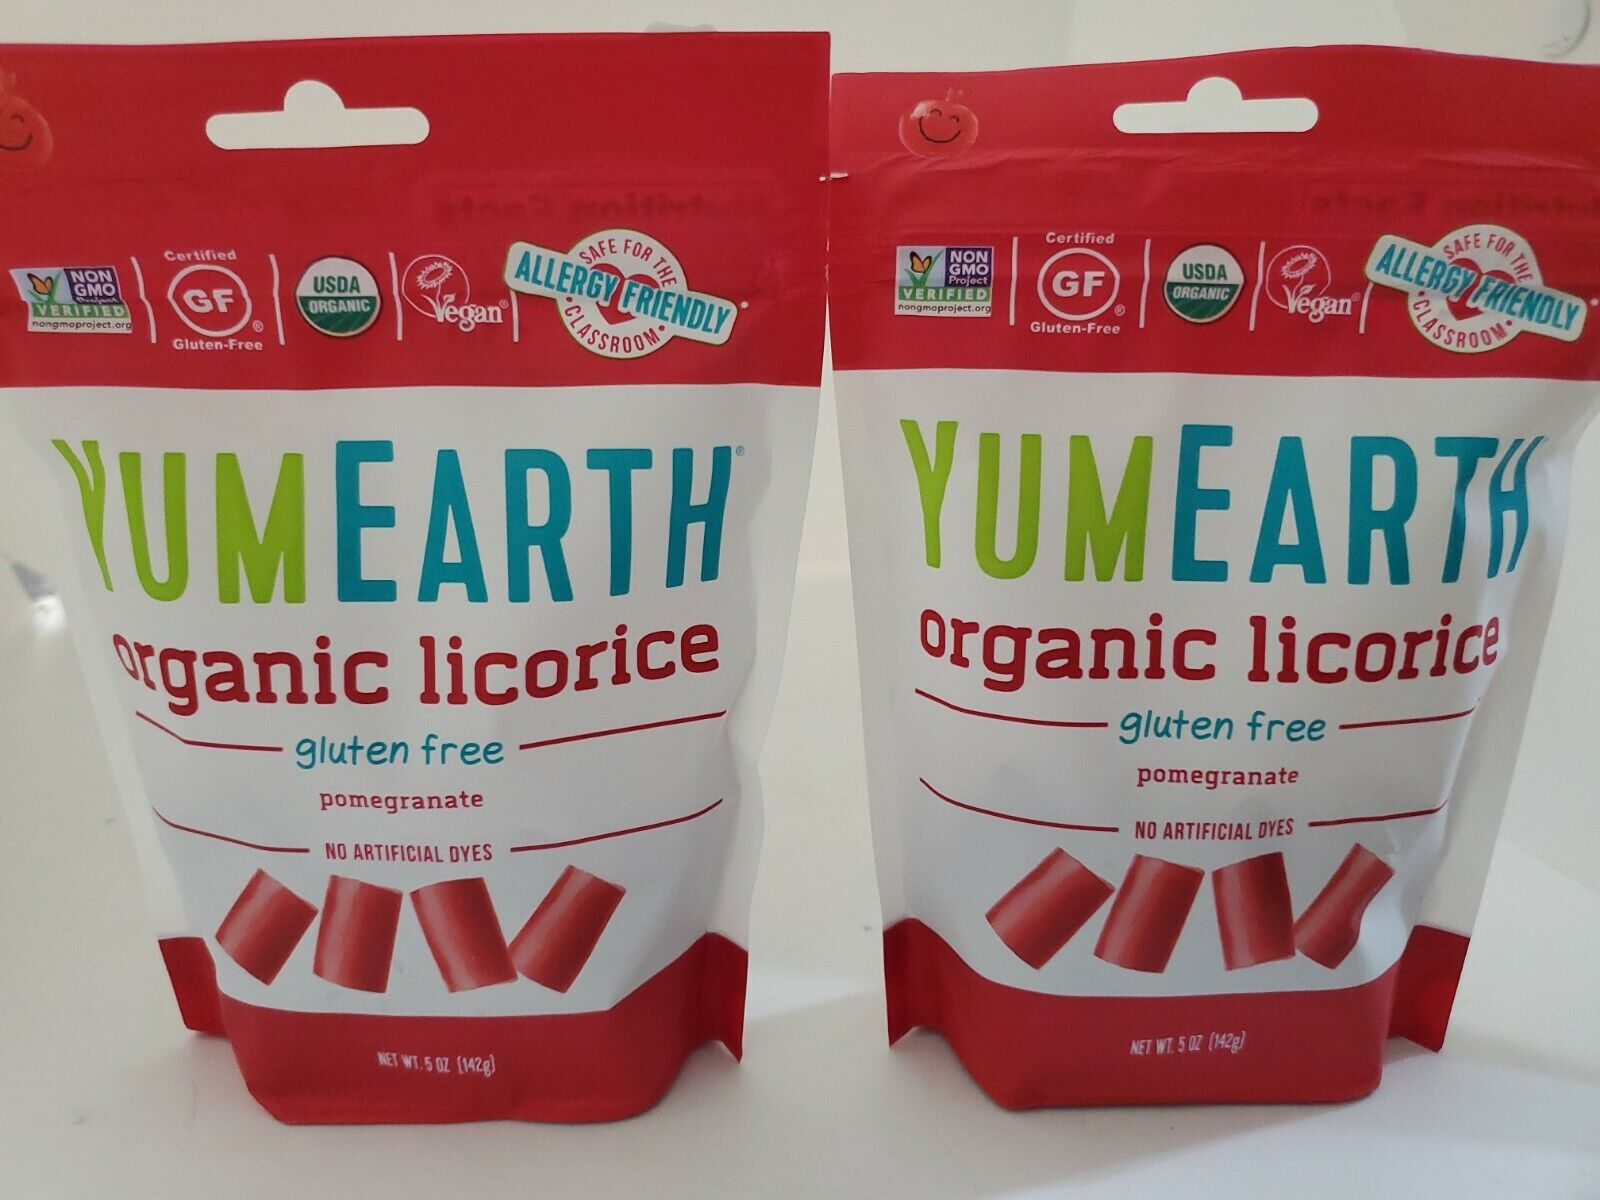 Yumearth Organic Licorice Gluten-free Pomegranate 5 Oz. (2 Pack) Exp.08/23